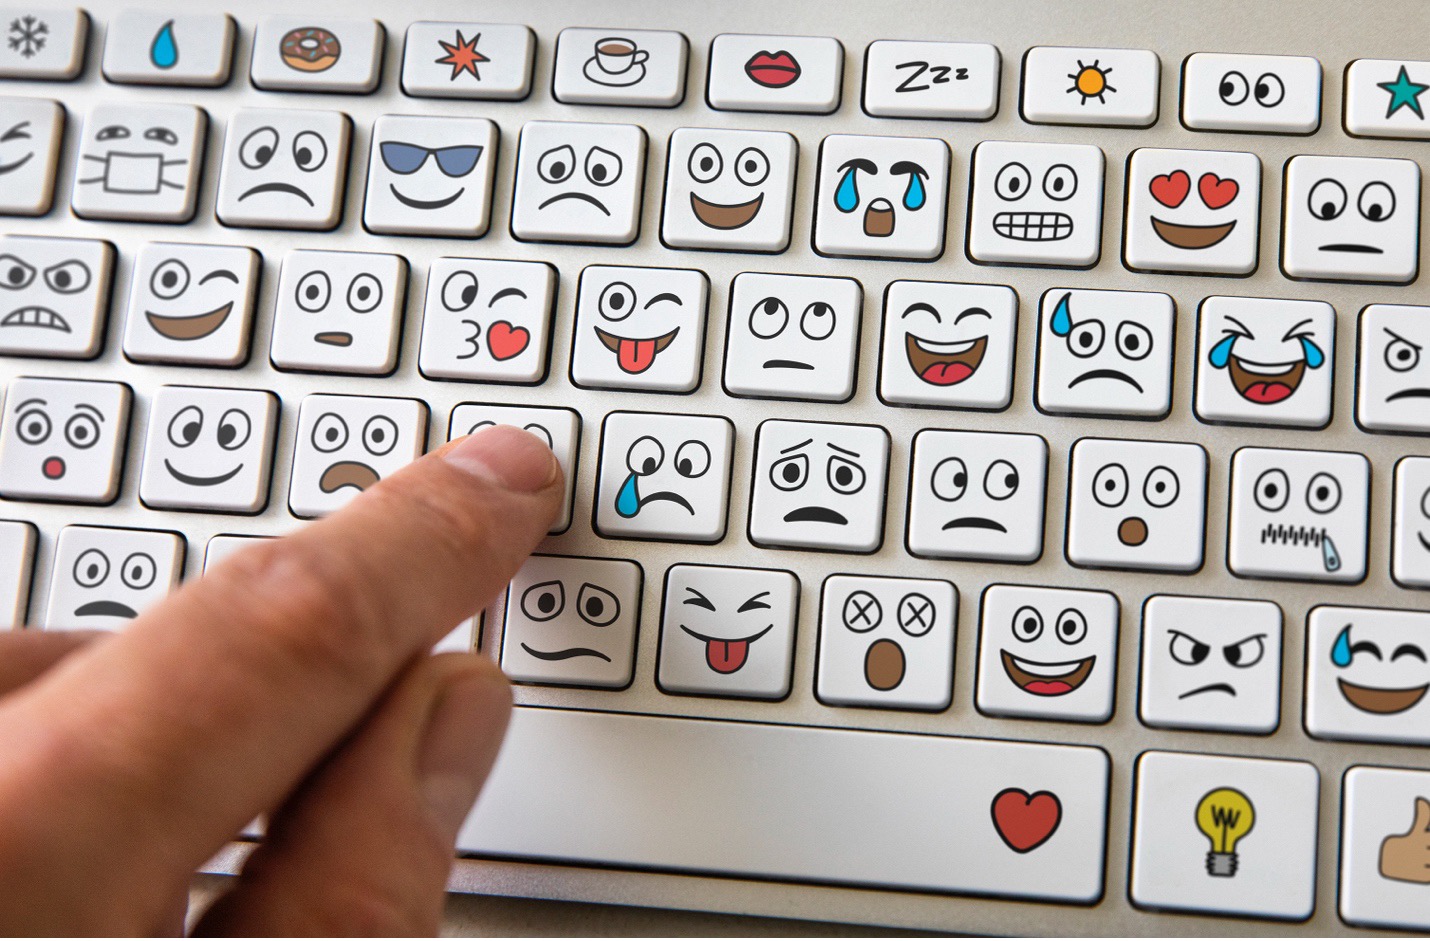 Keyboard with emoji faces